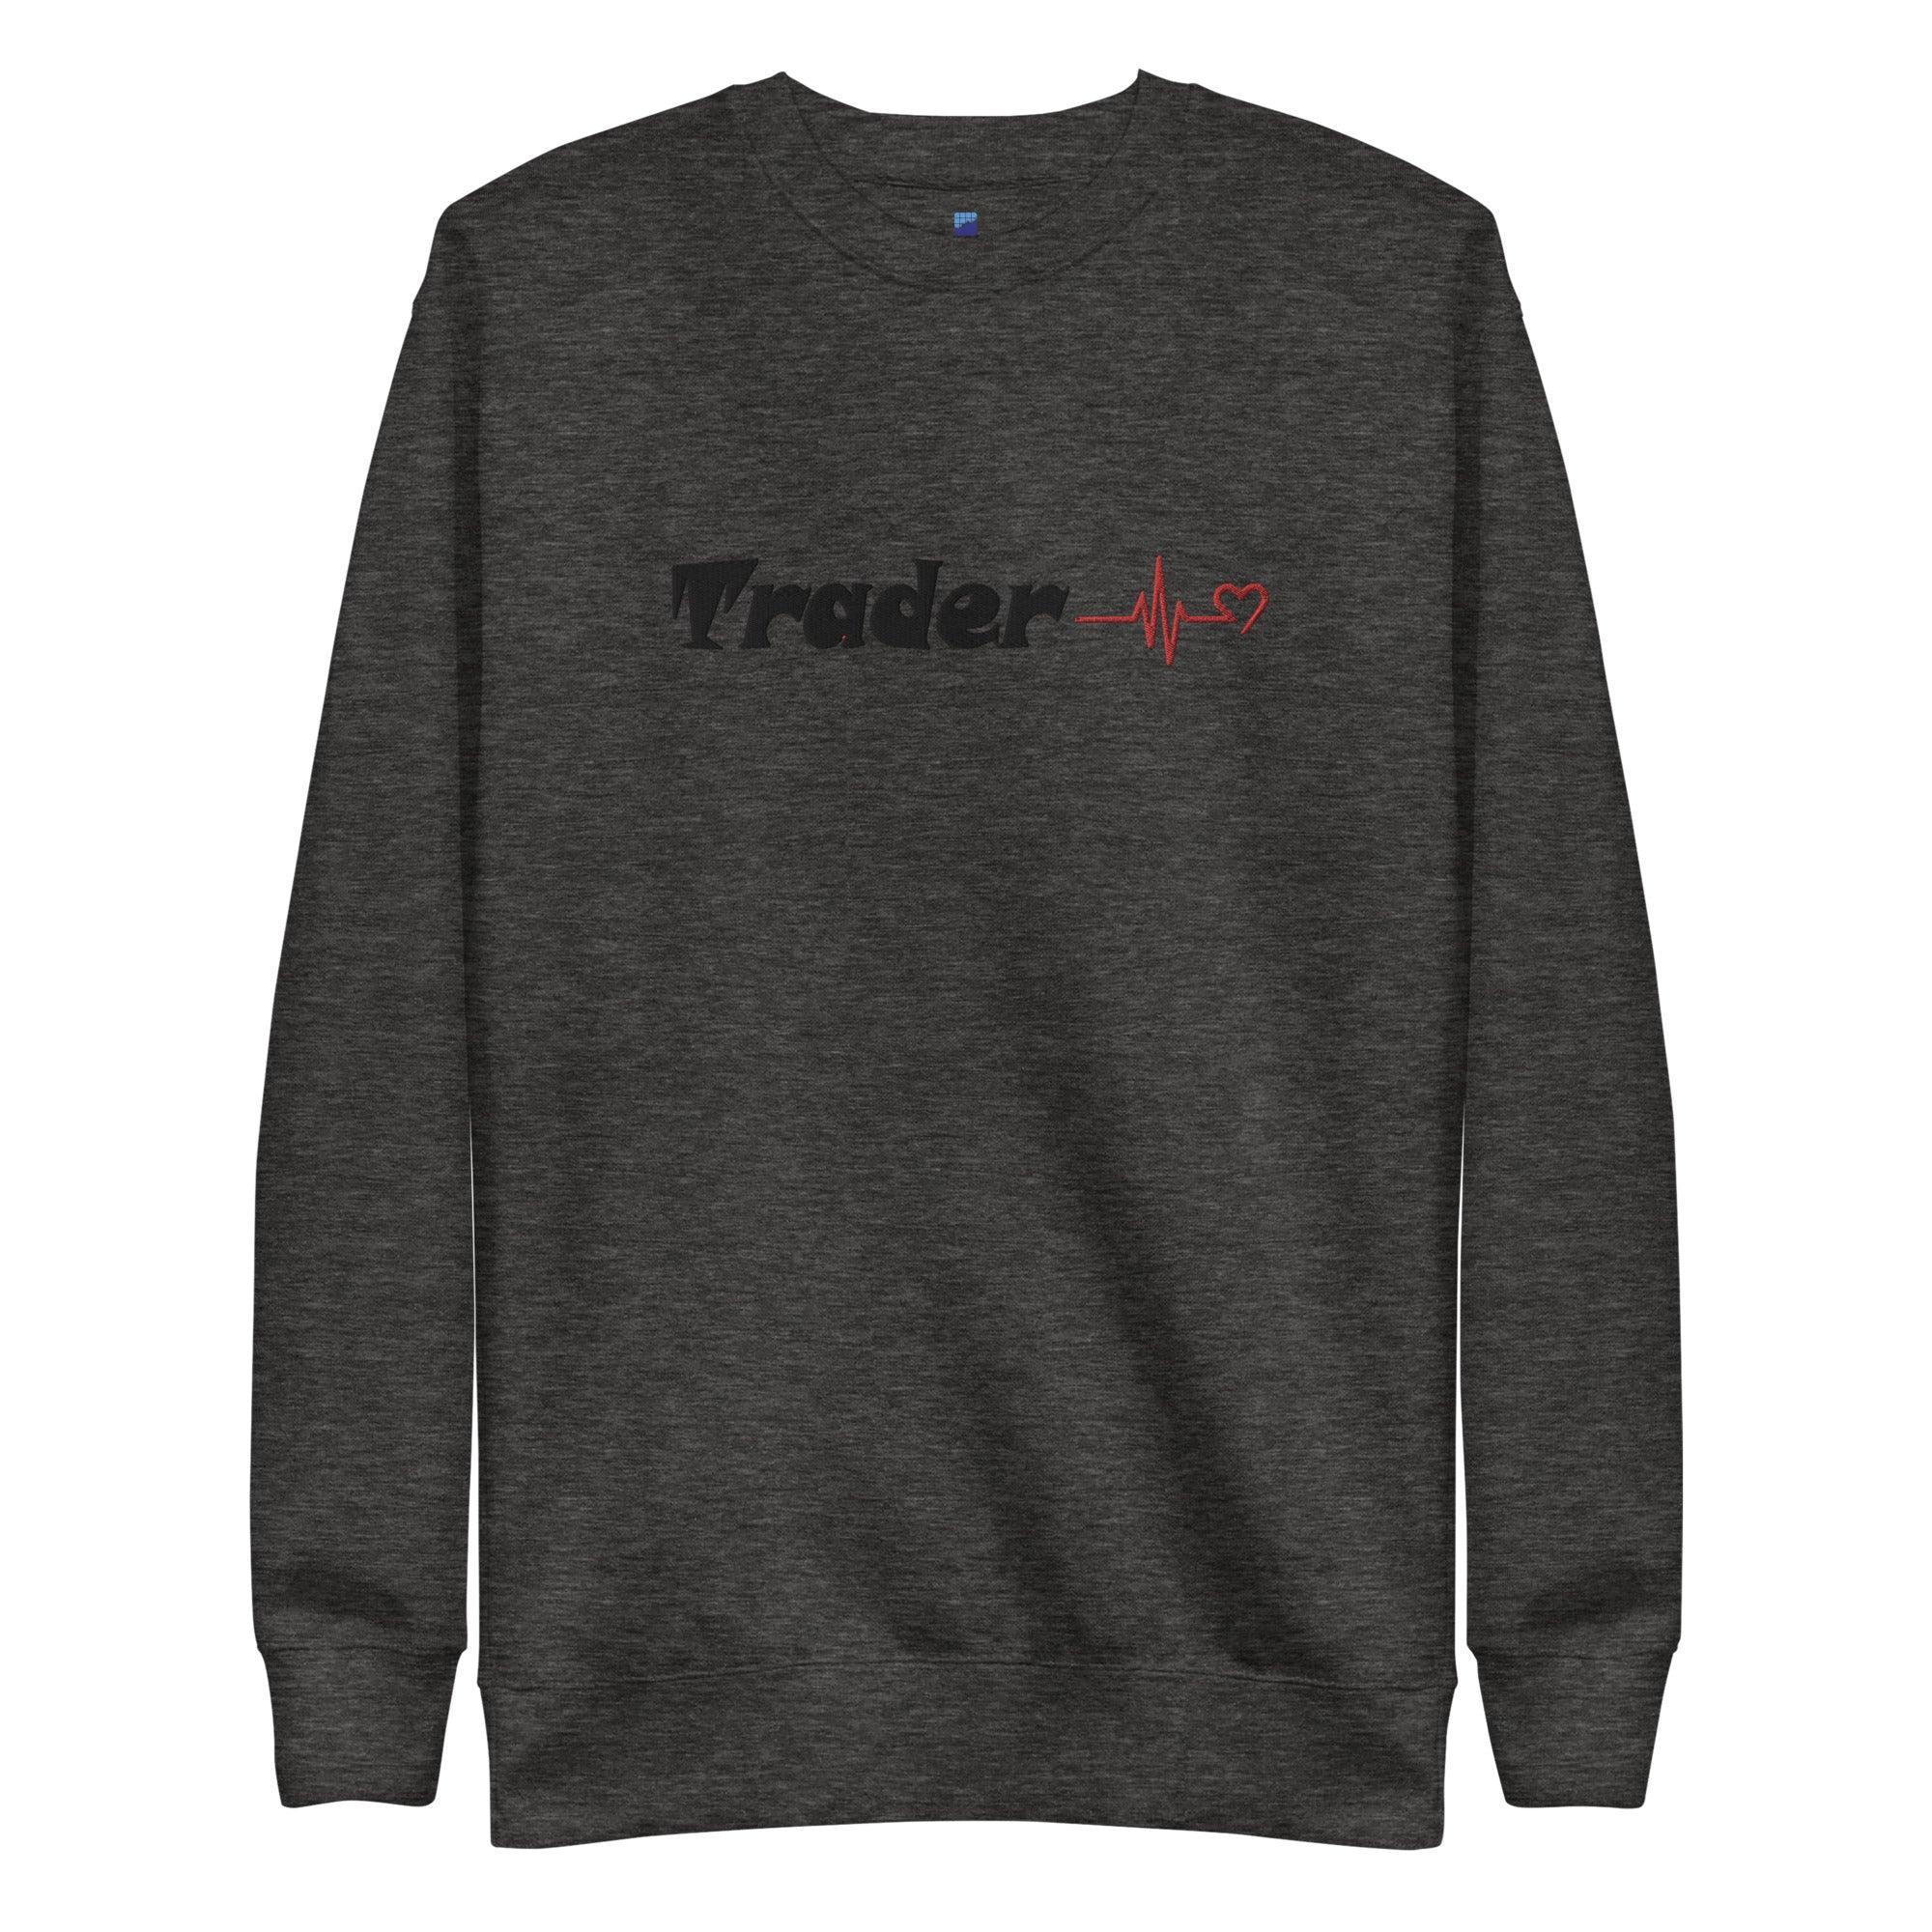 Trader Love Sweatshirt - InvestmenTees